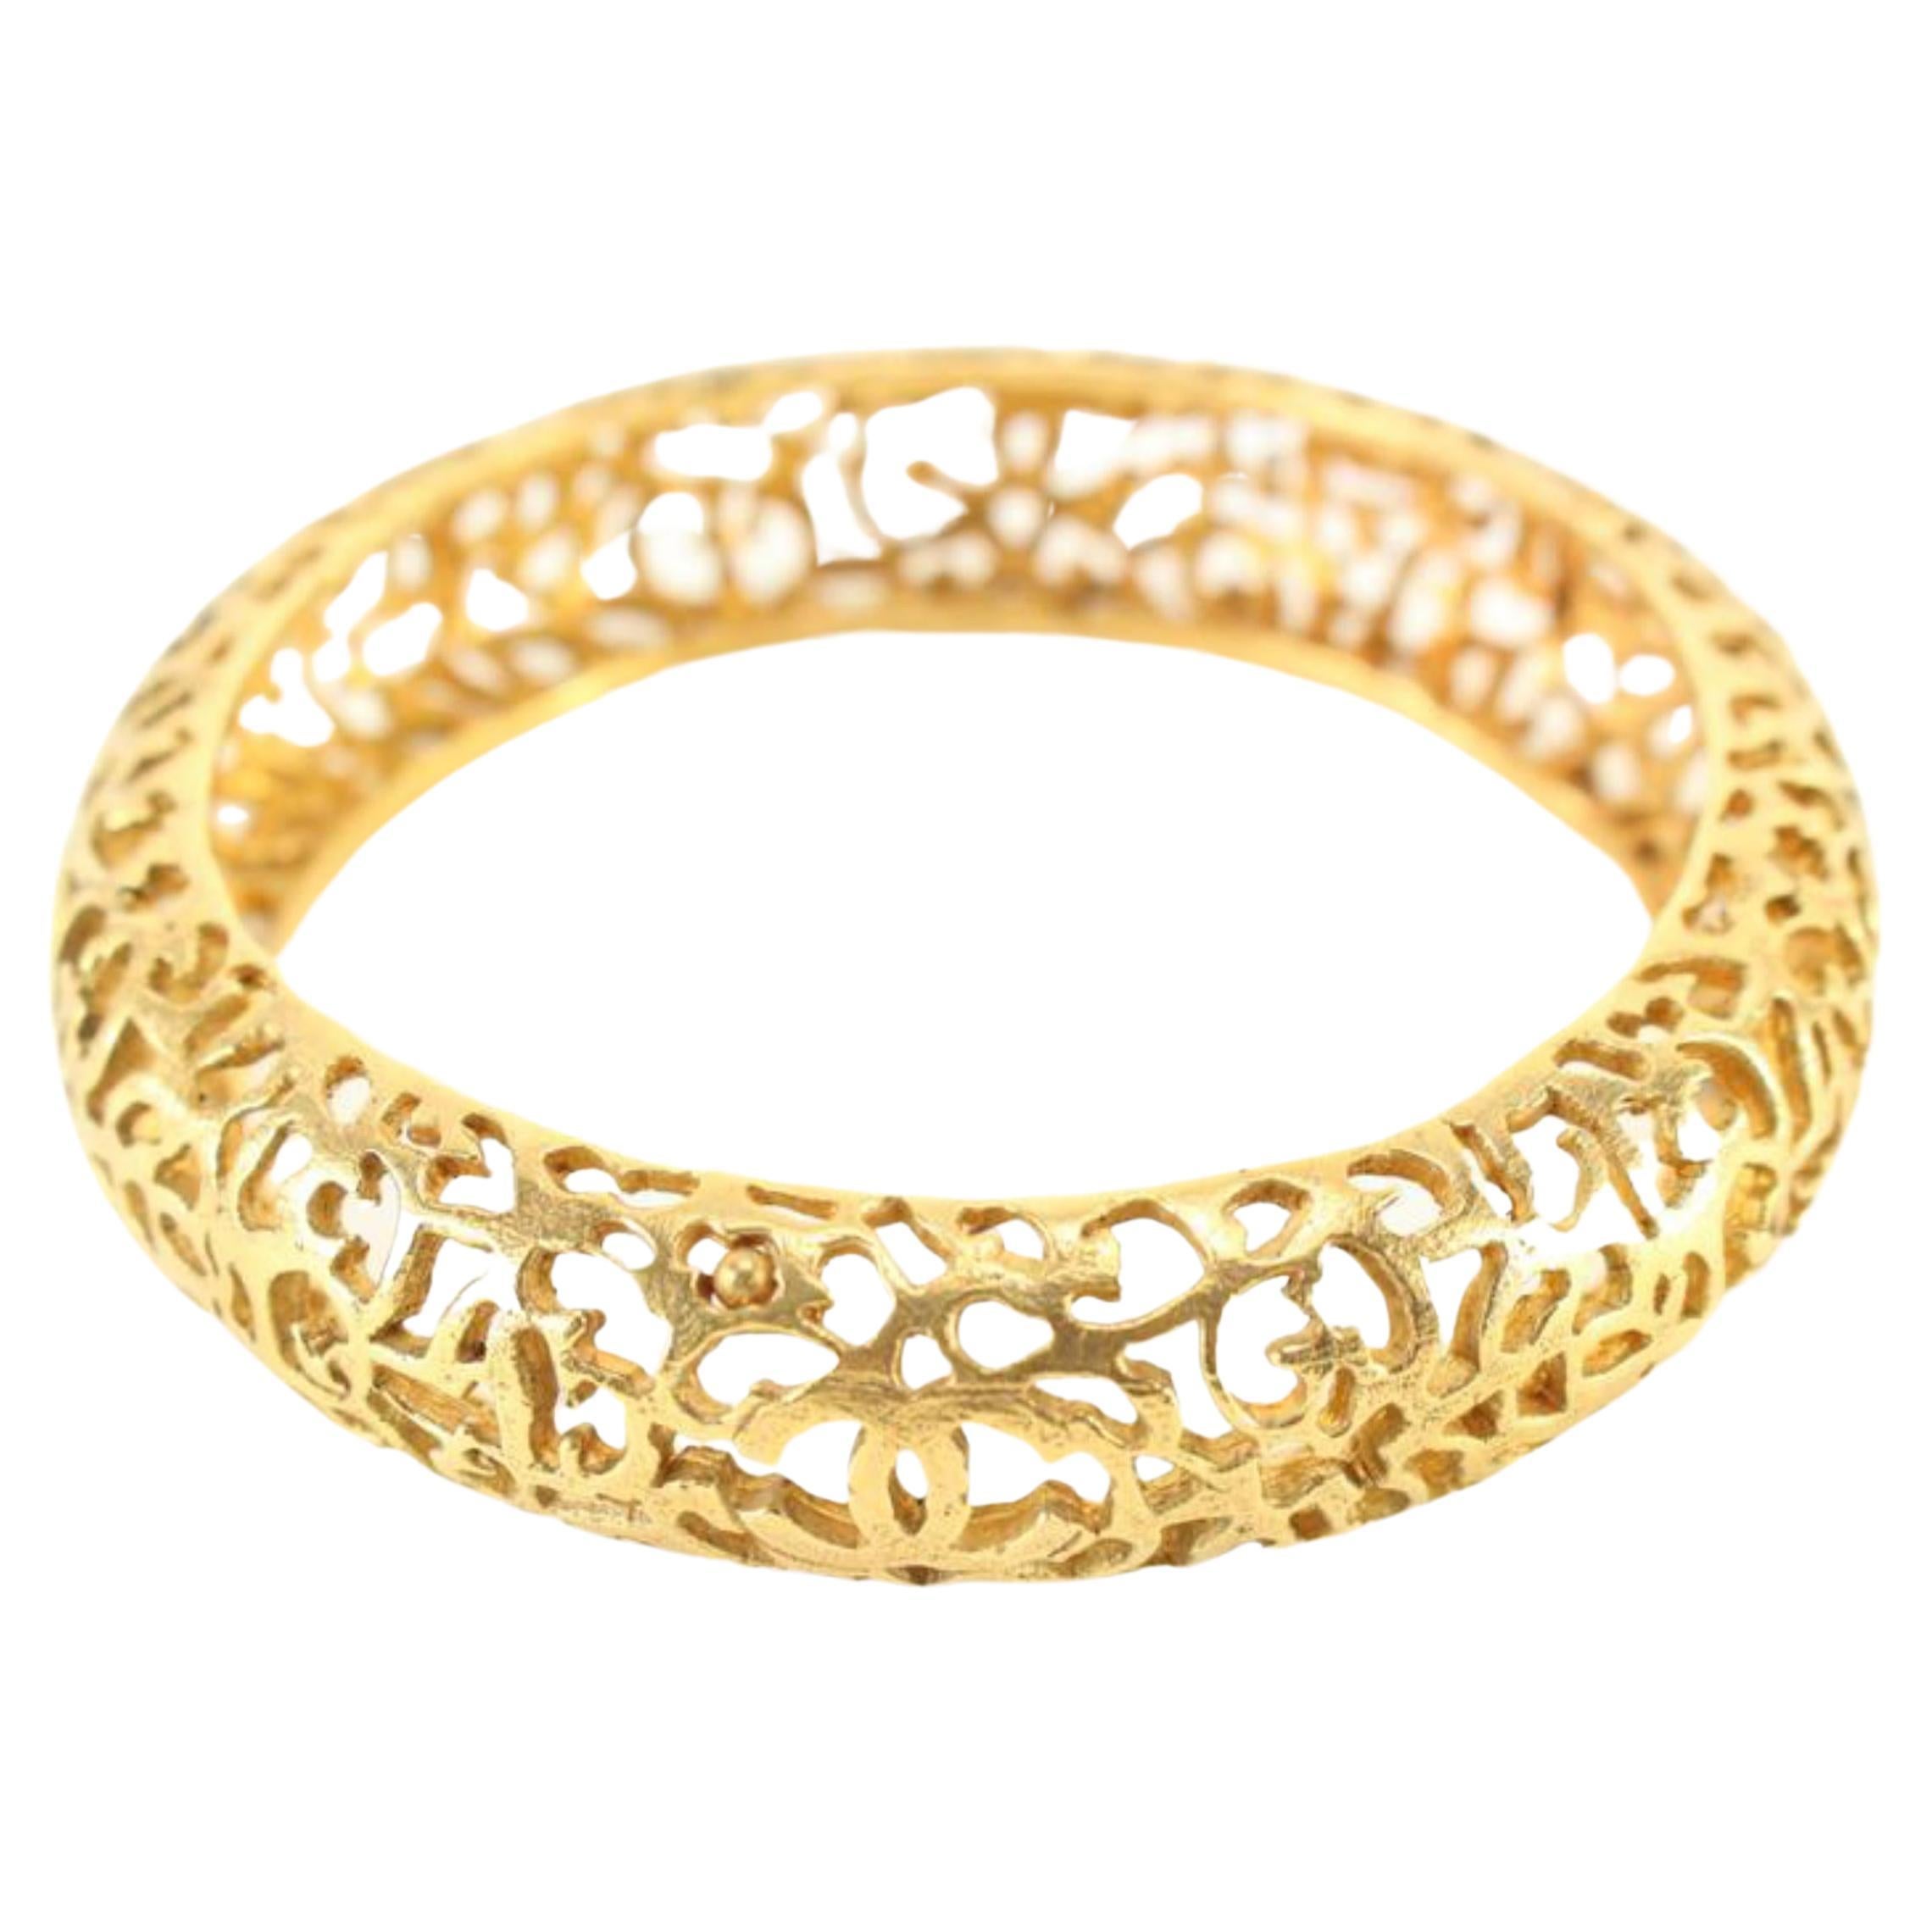 Chanel 24k Gold Plated Collection 25 CC Logo Bangle Bracelet 80ck817s